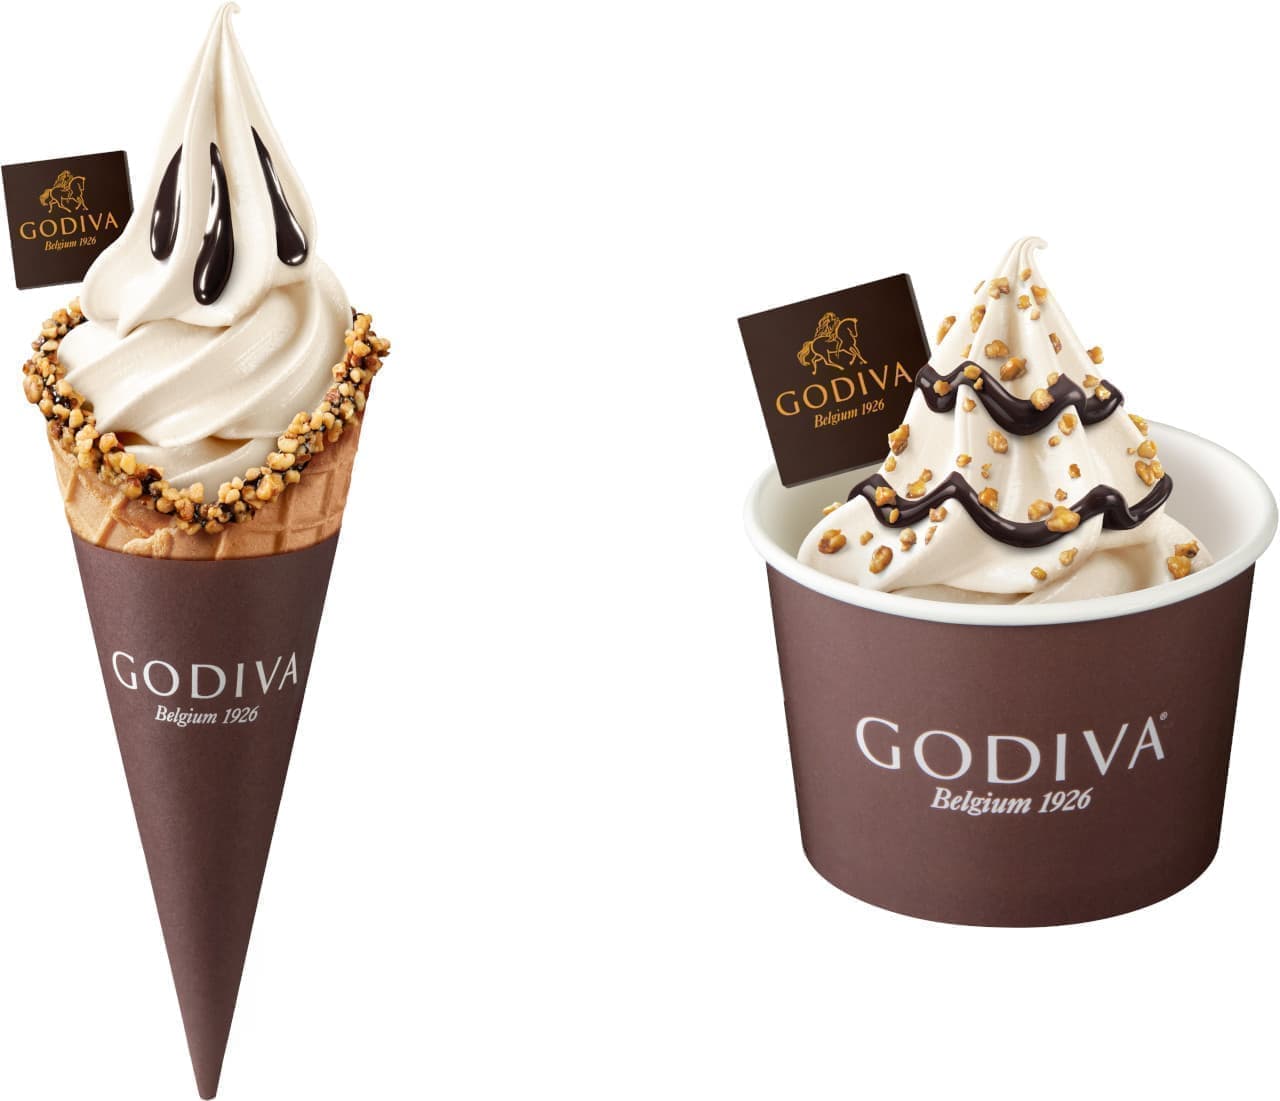 Godiva "Godiva soft serve ice cream Hokkaido milk